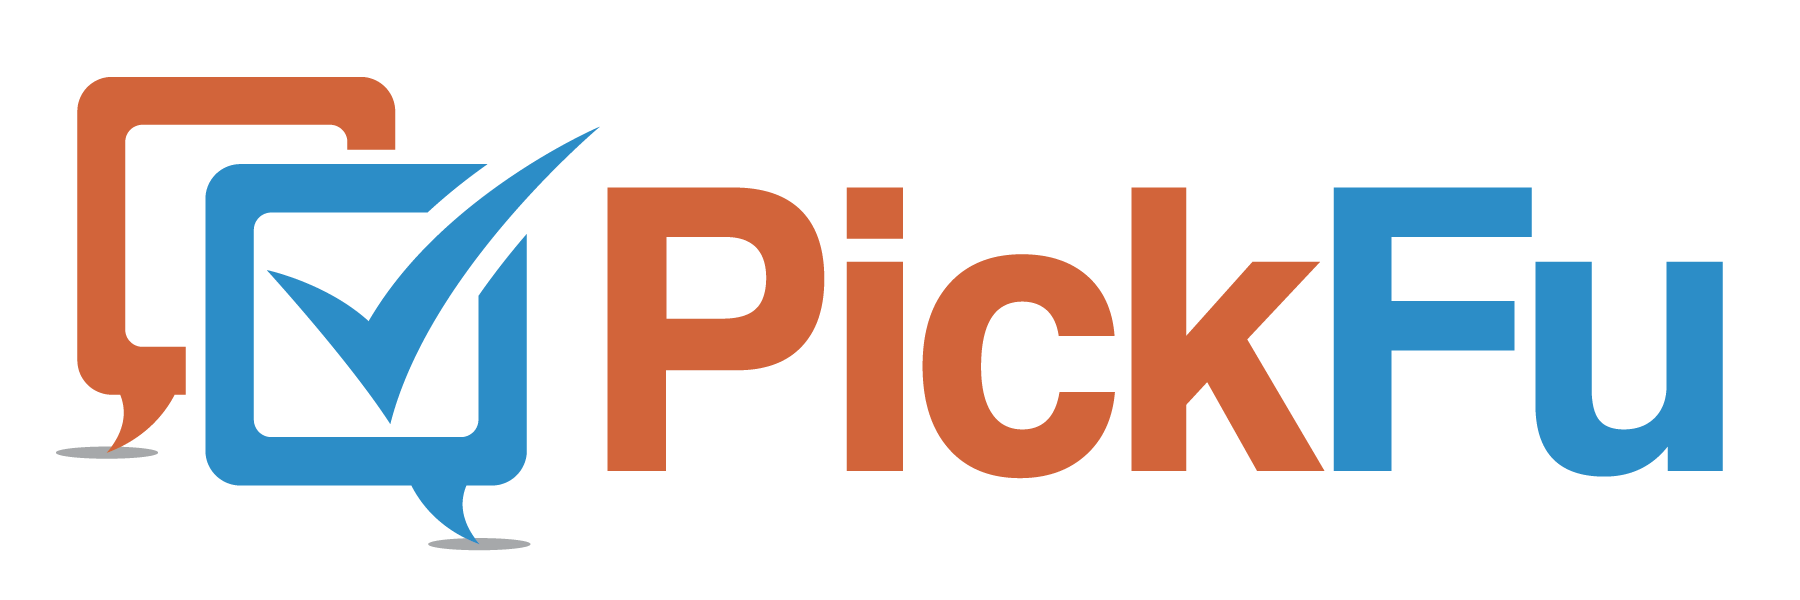 pickfu-logo.png